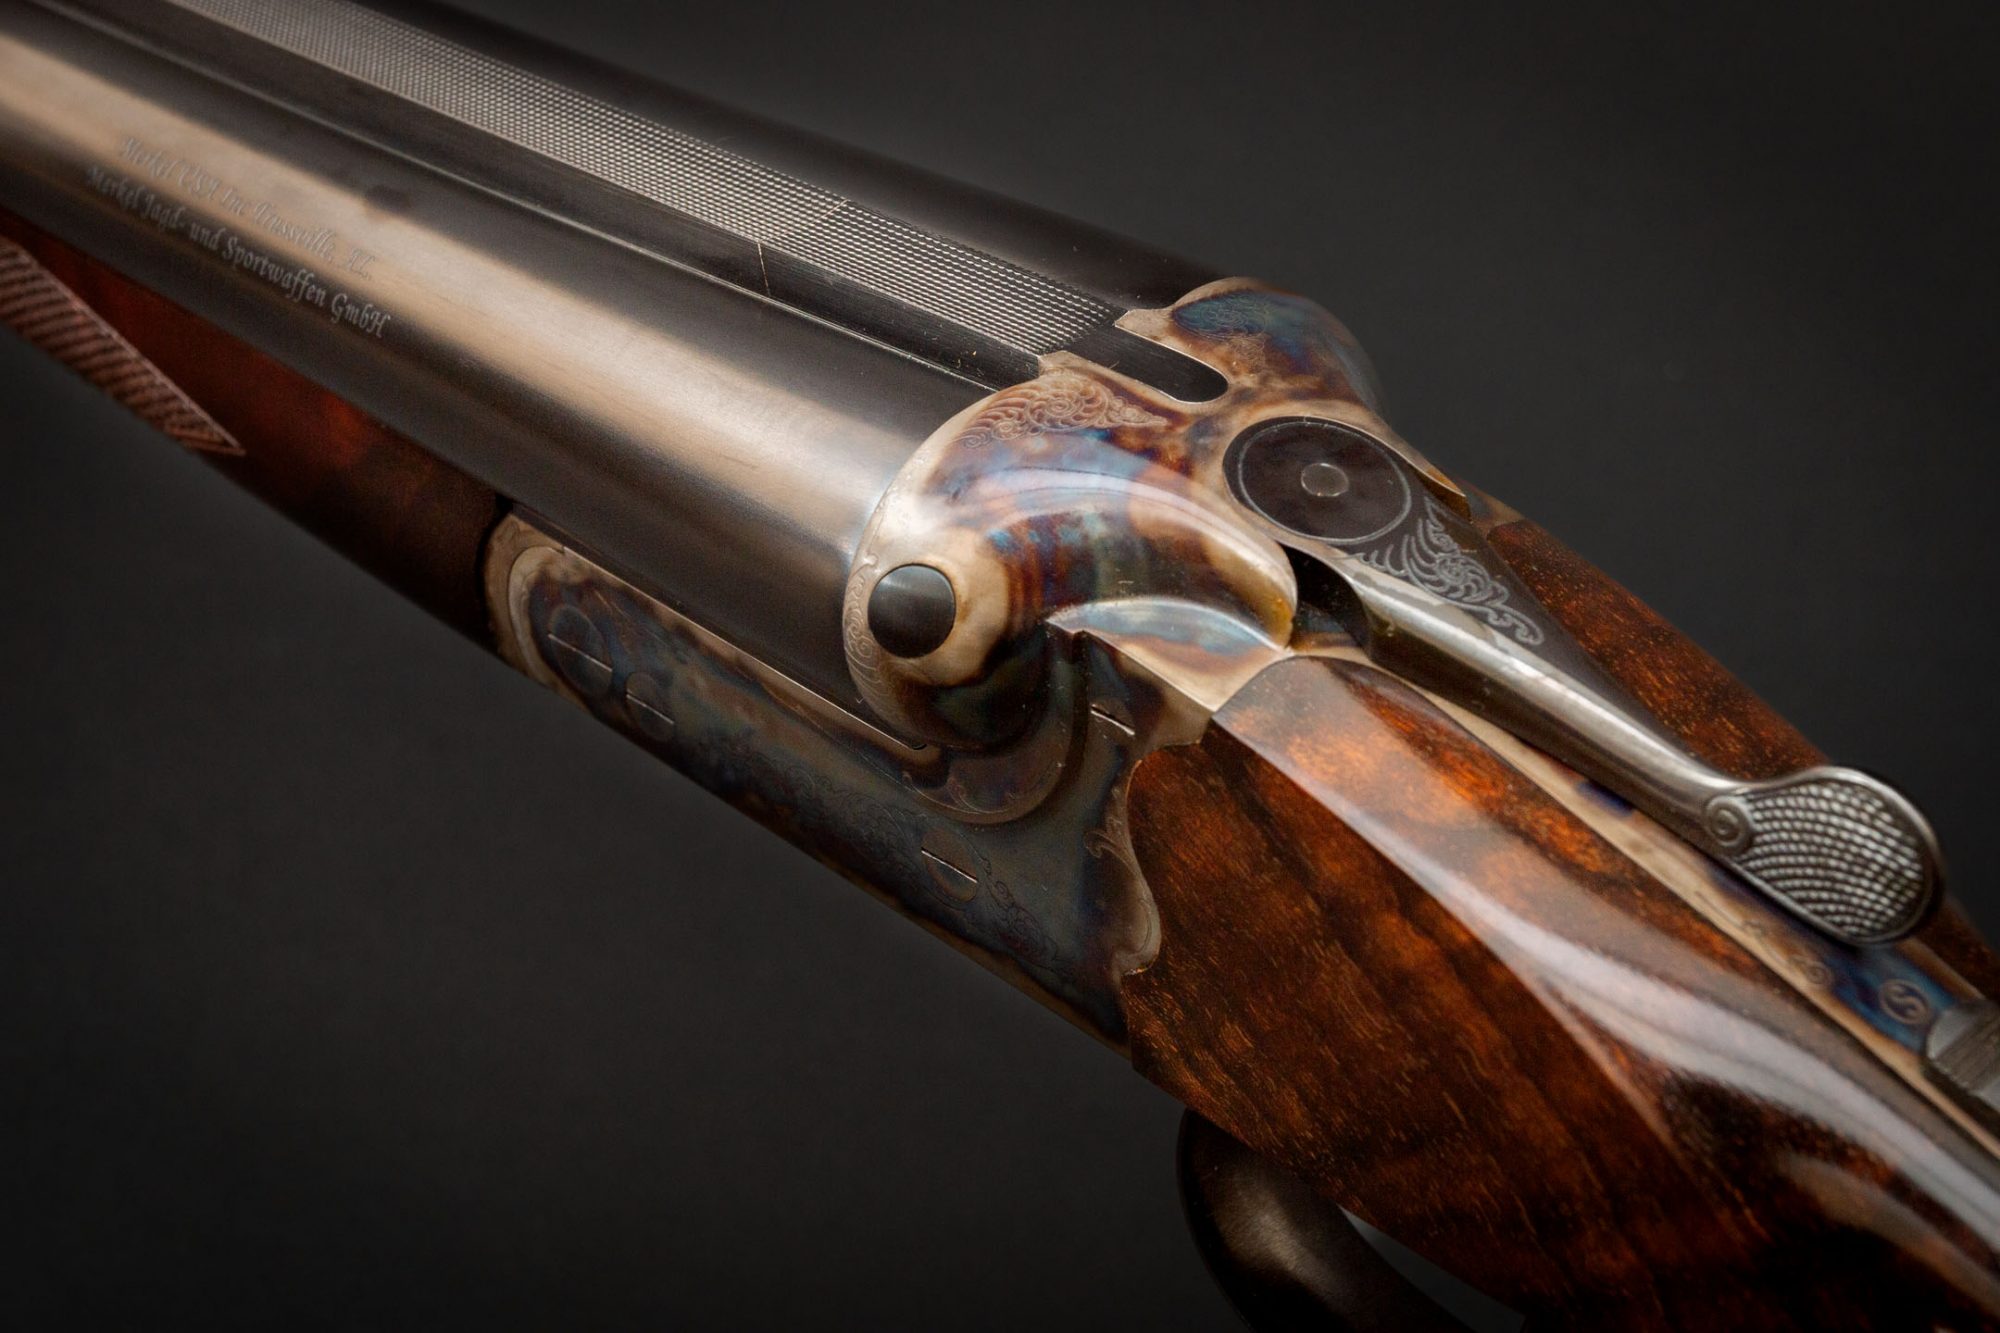 Merkel 47E 12 gauge side-by-side shotgun, for sale by Turnbull Restoration of Bloomfield, NY